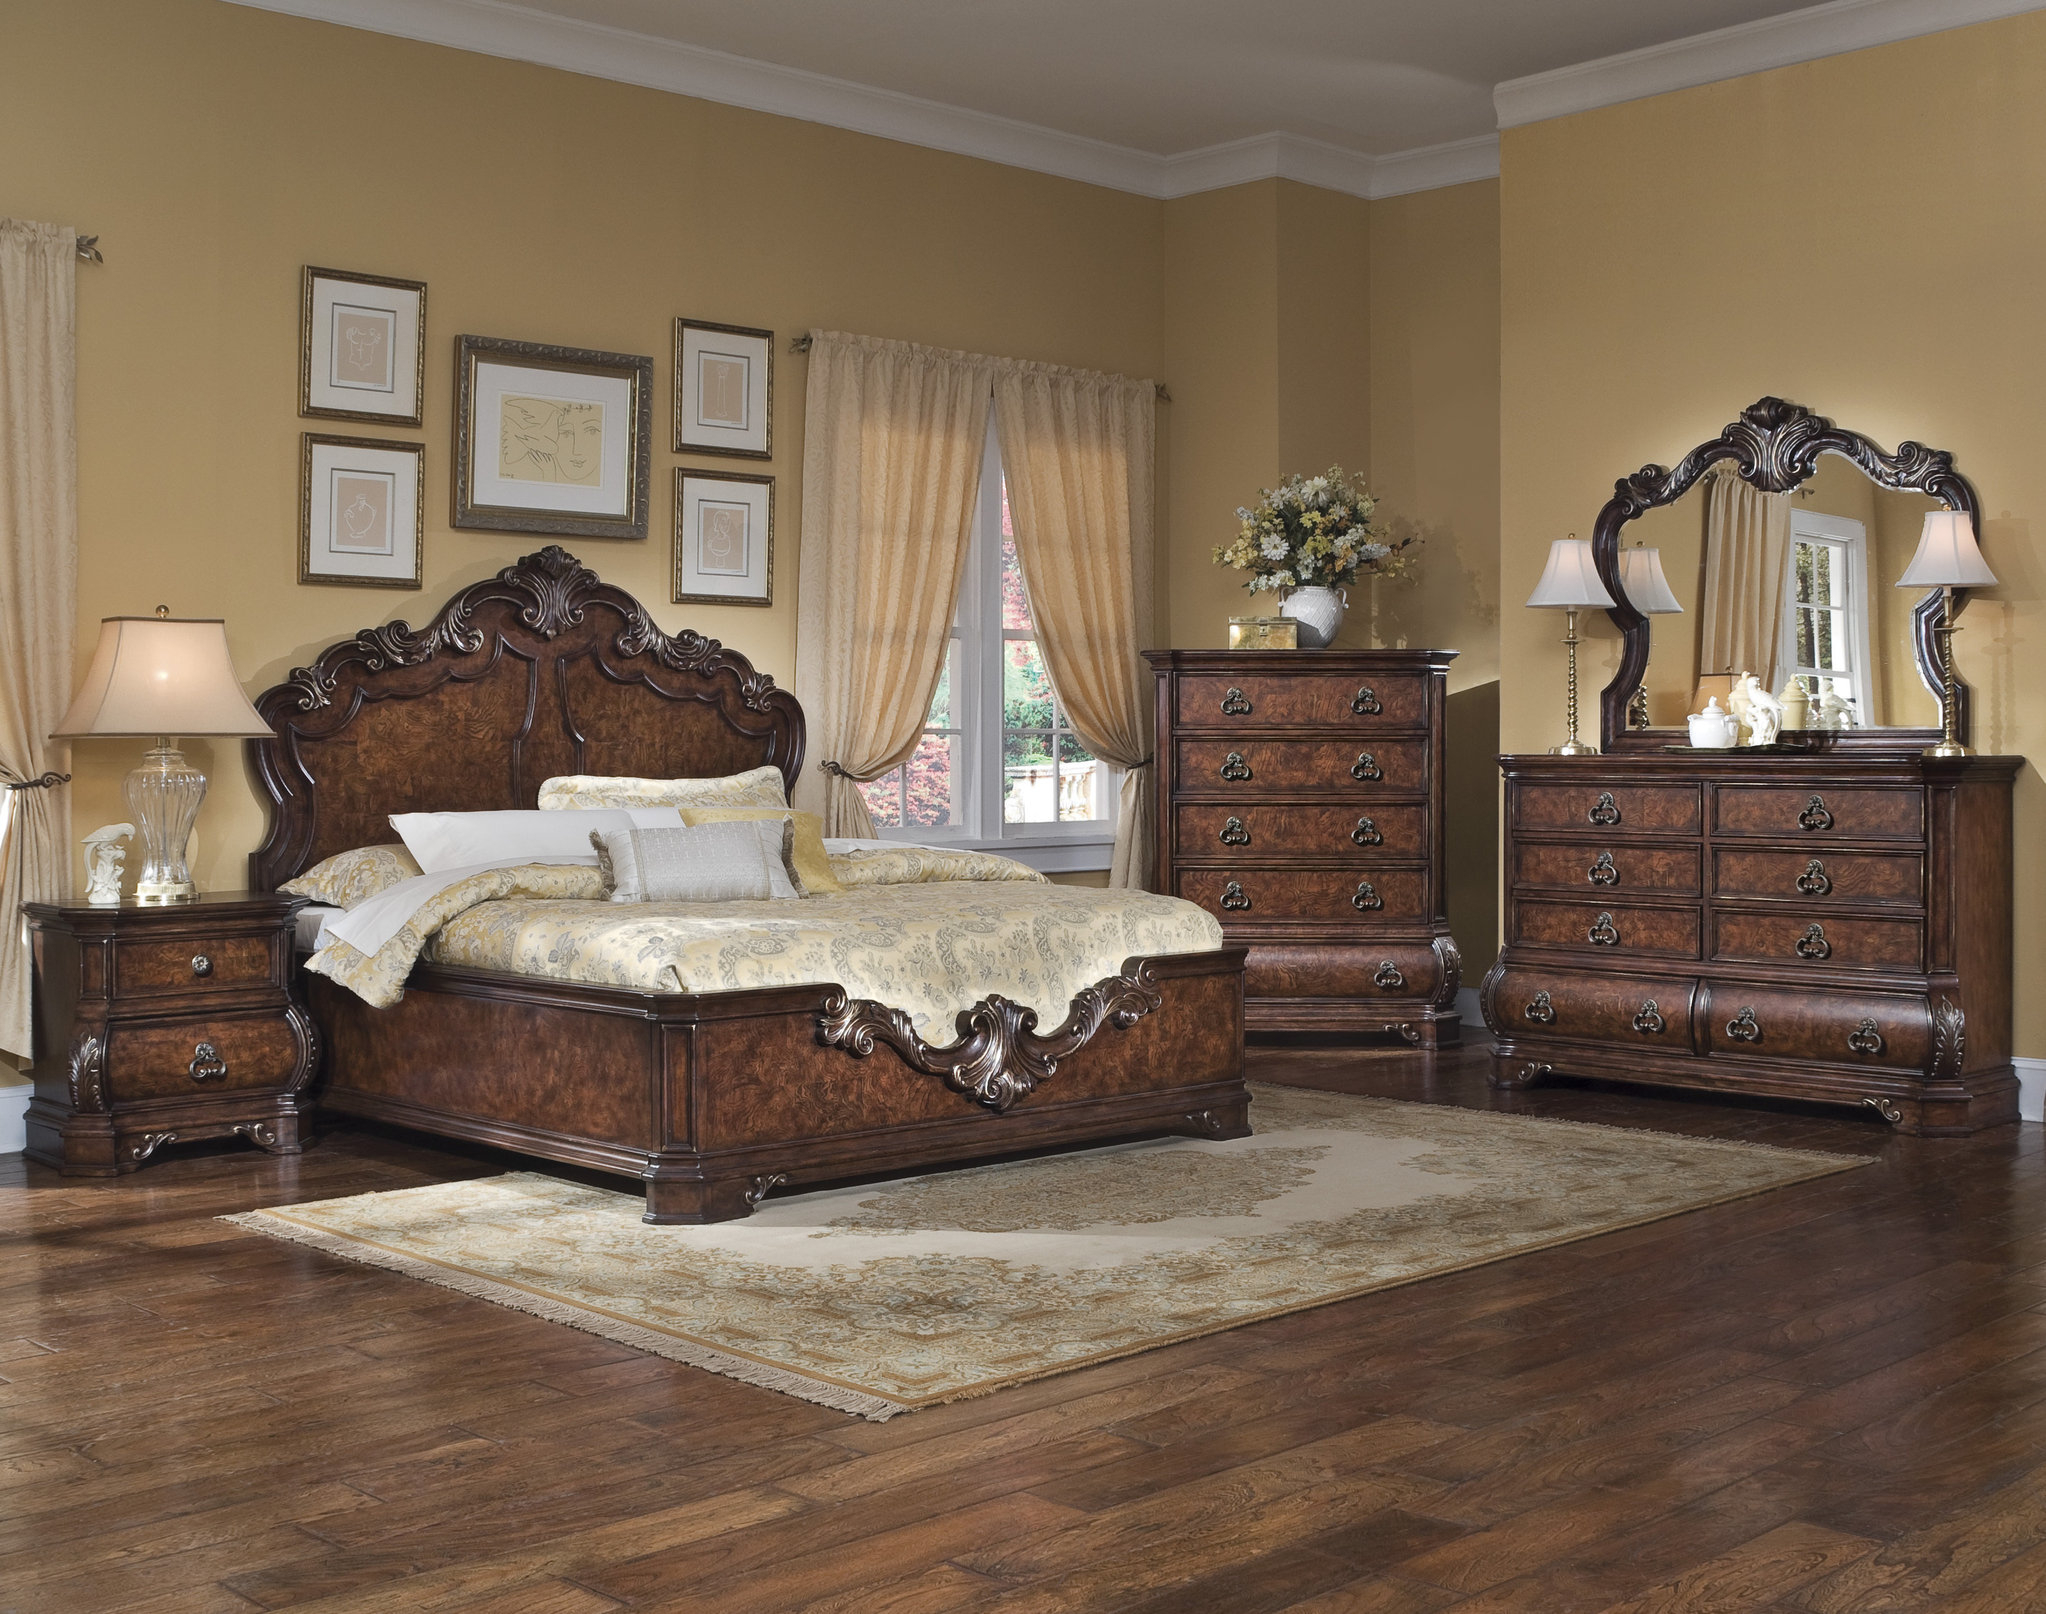 Pulaski bedroom sets 7